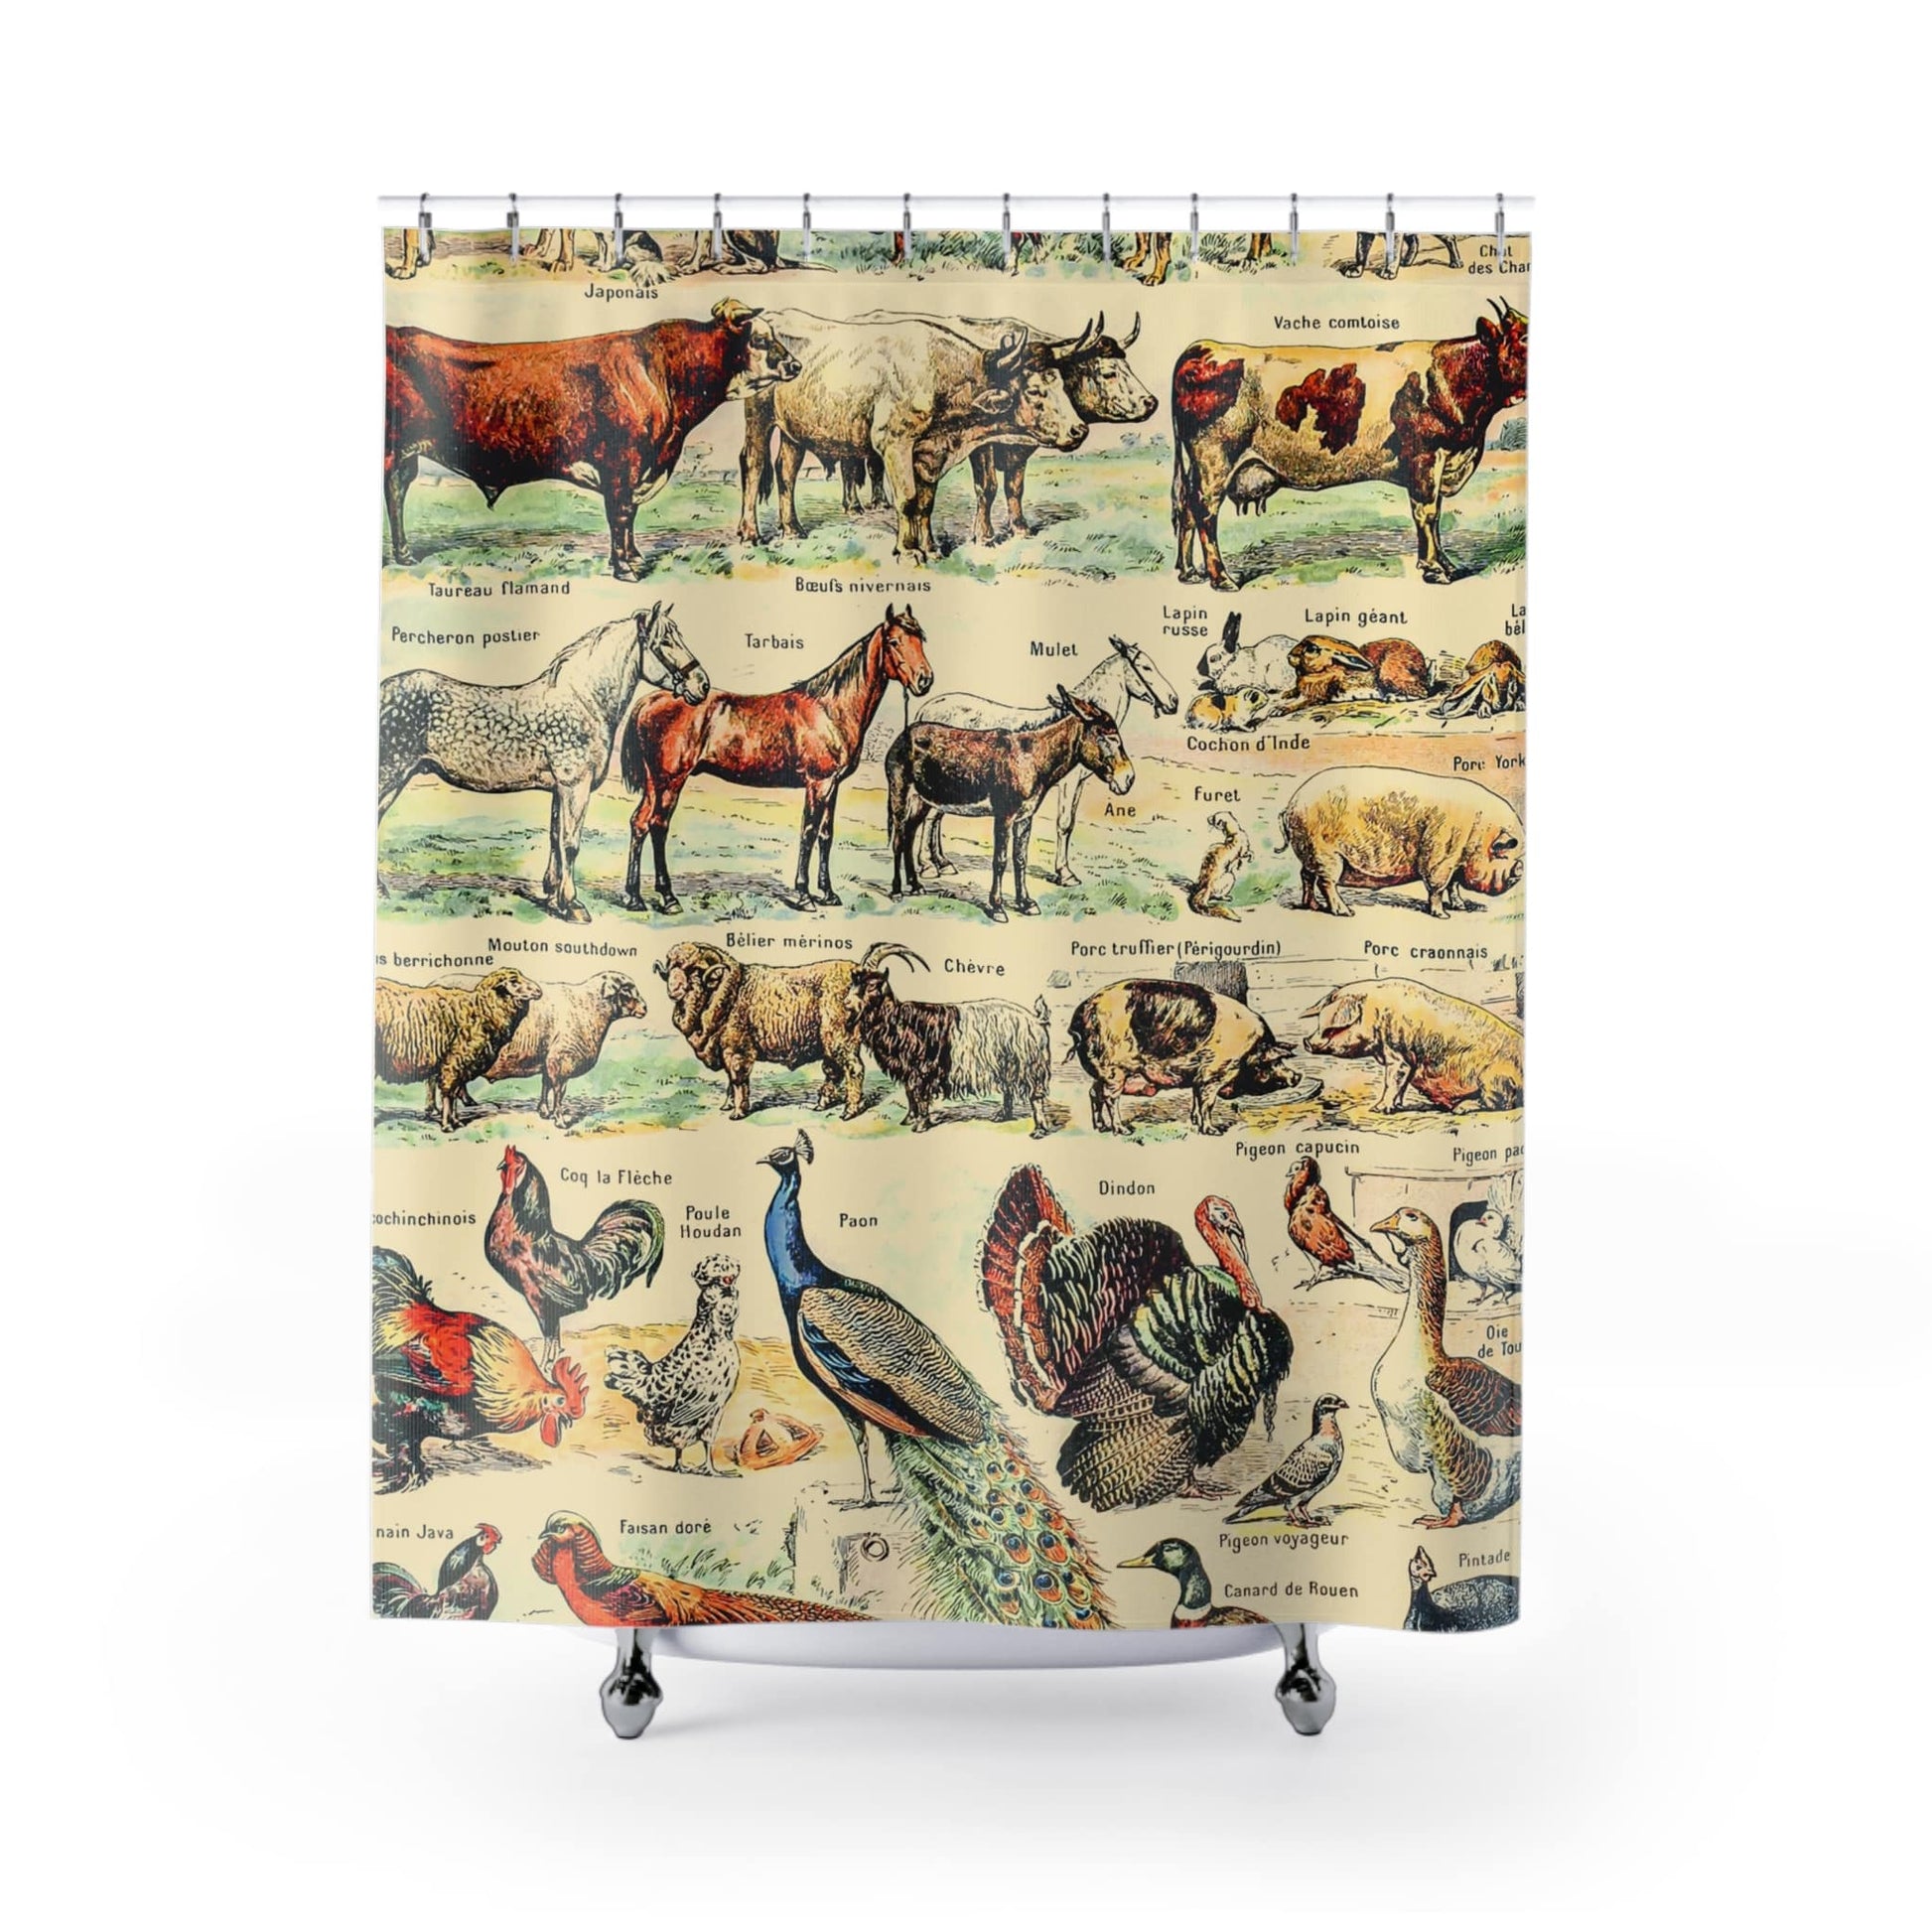 Farm Animals Shower Curtain with country design, rustic bathroom decor featuring charming farm animal scenes.